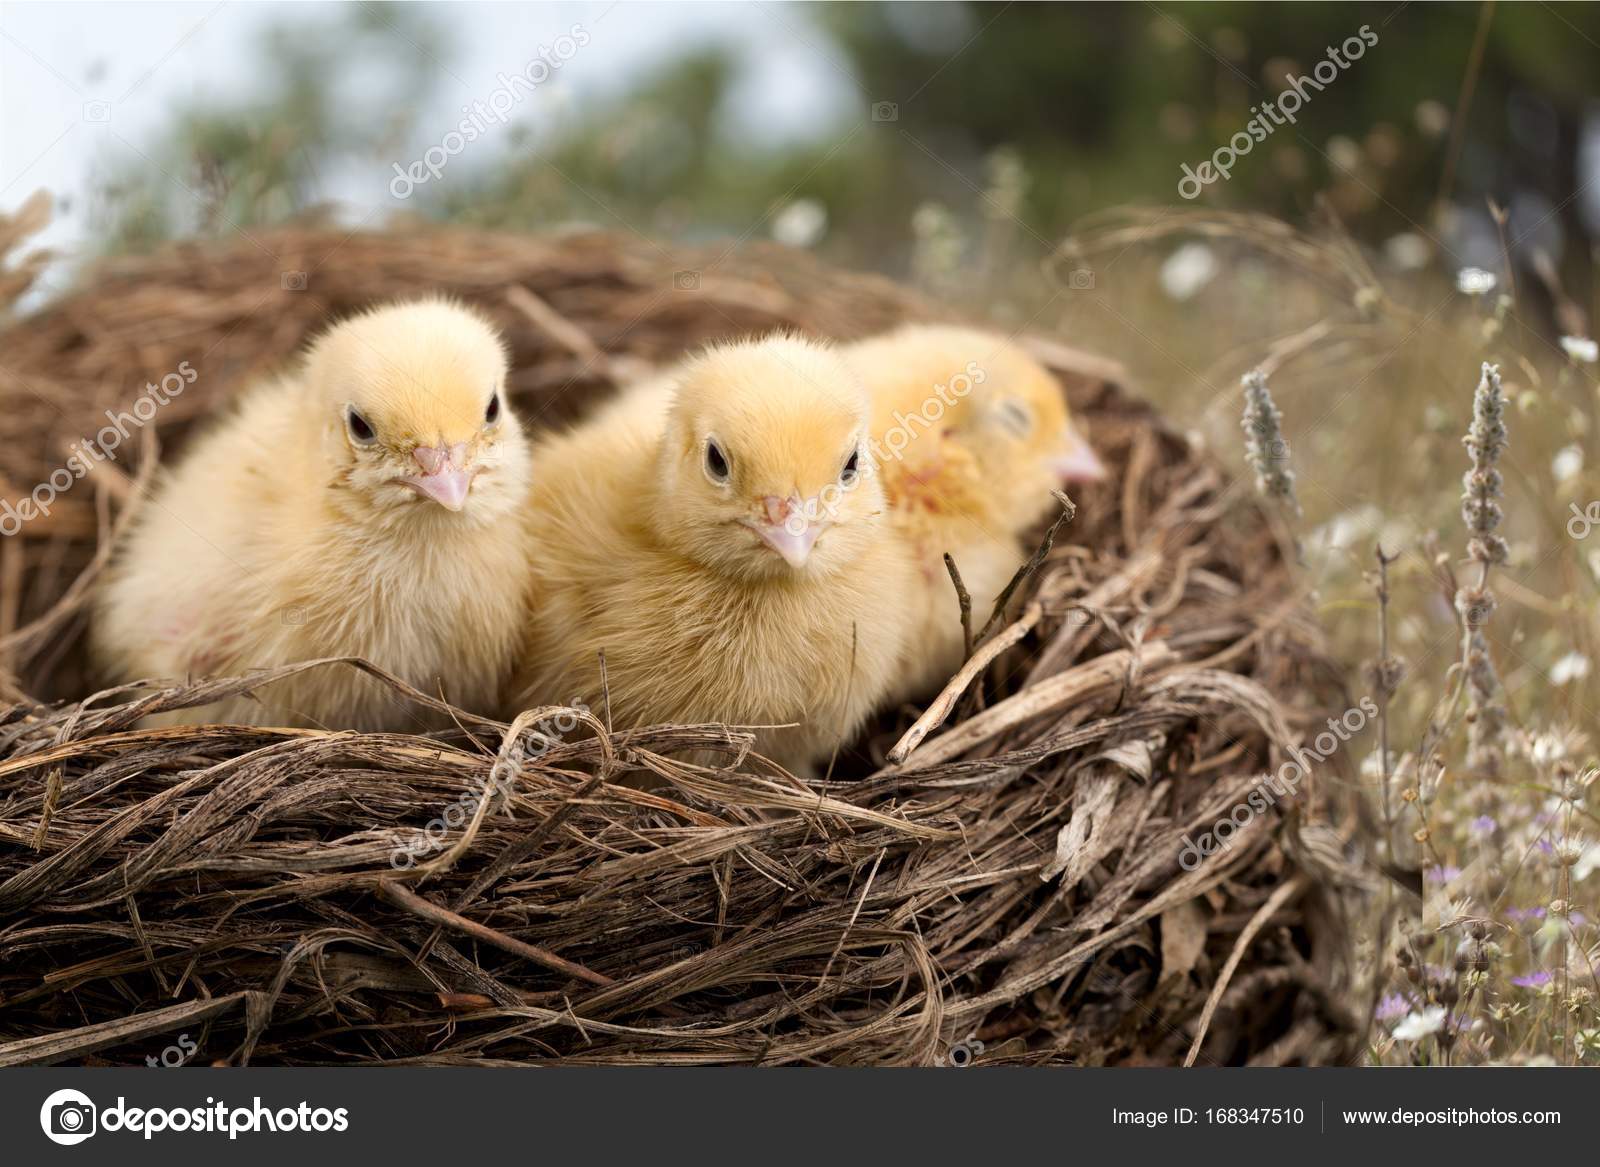 Small Chicks